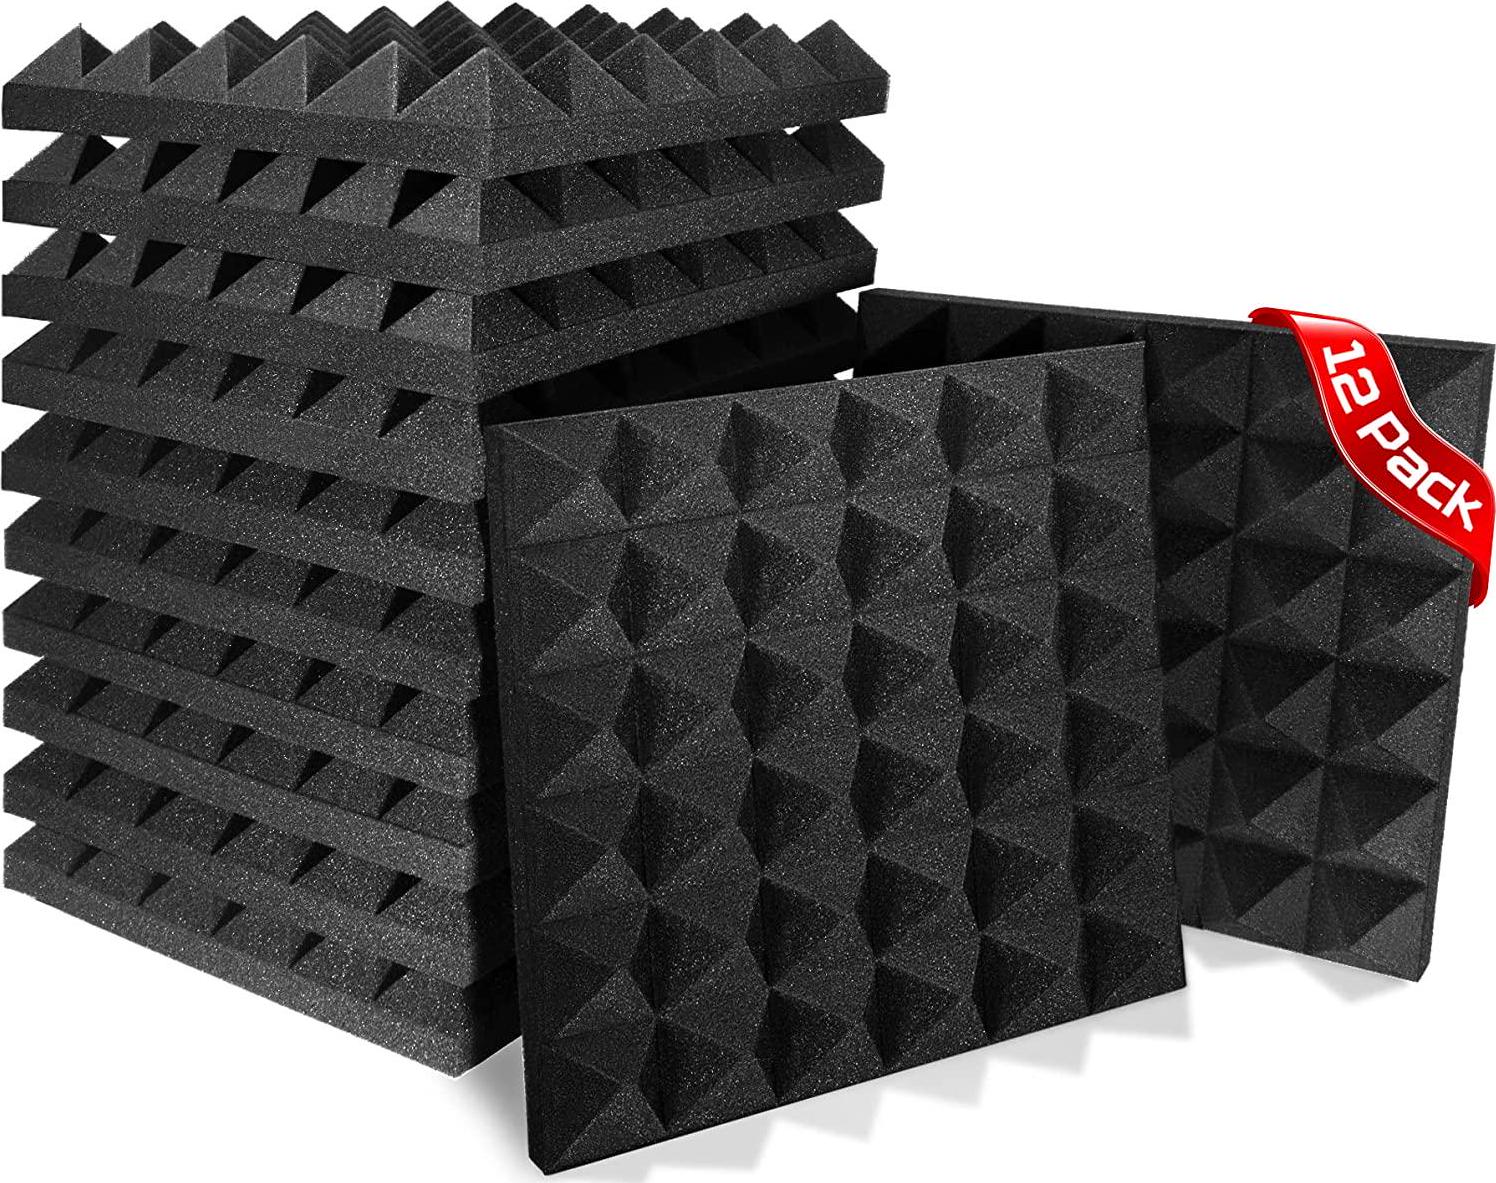 Little-Lucky, Little-Lucky Acoustic Foam Panels,SoundProof Padding Foam Panels,2 X 12 X 12 Studio Foam Pyramid Tiles Sound Absorbing Dampening Foam Treatment Wall Panels -12Pack (12Pack, Black)